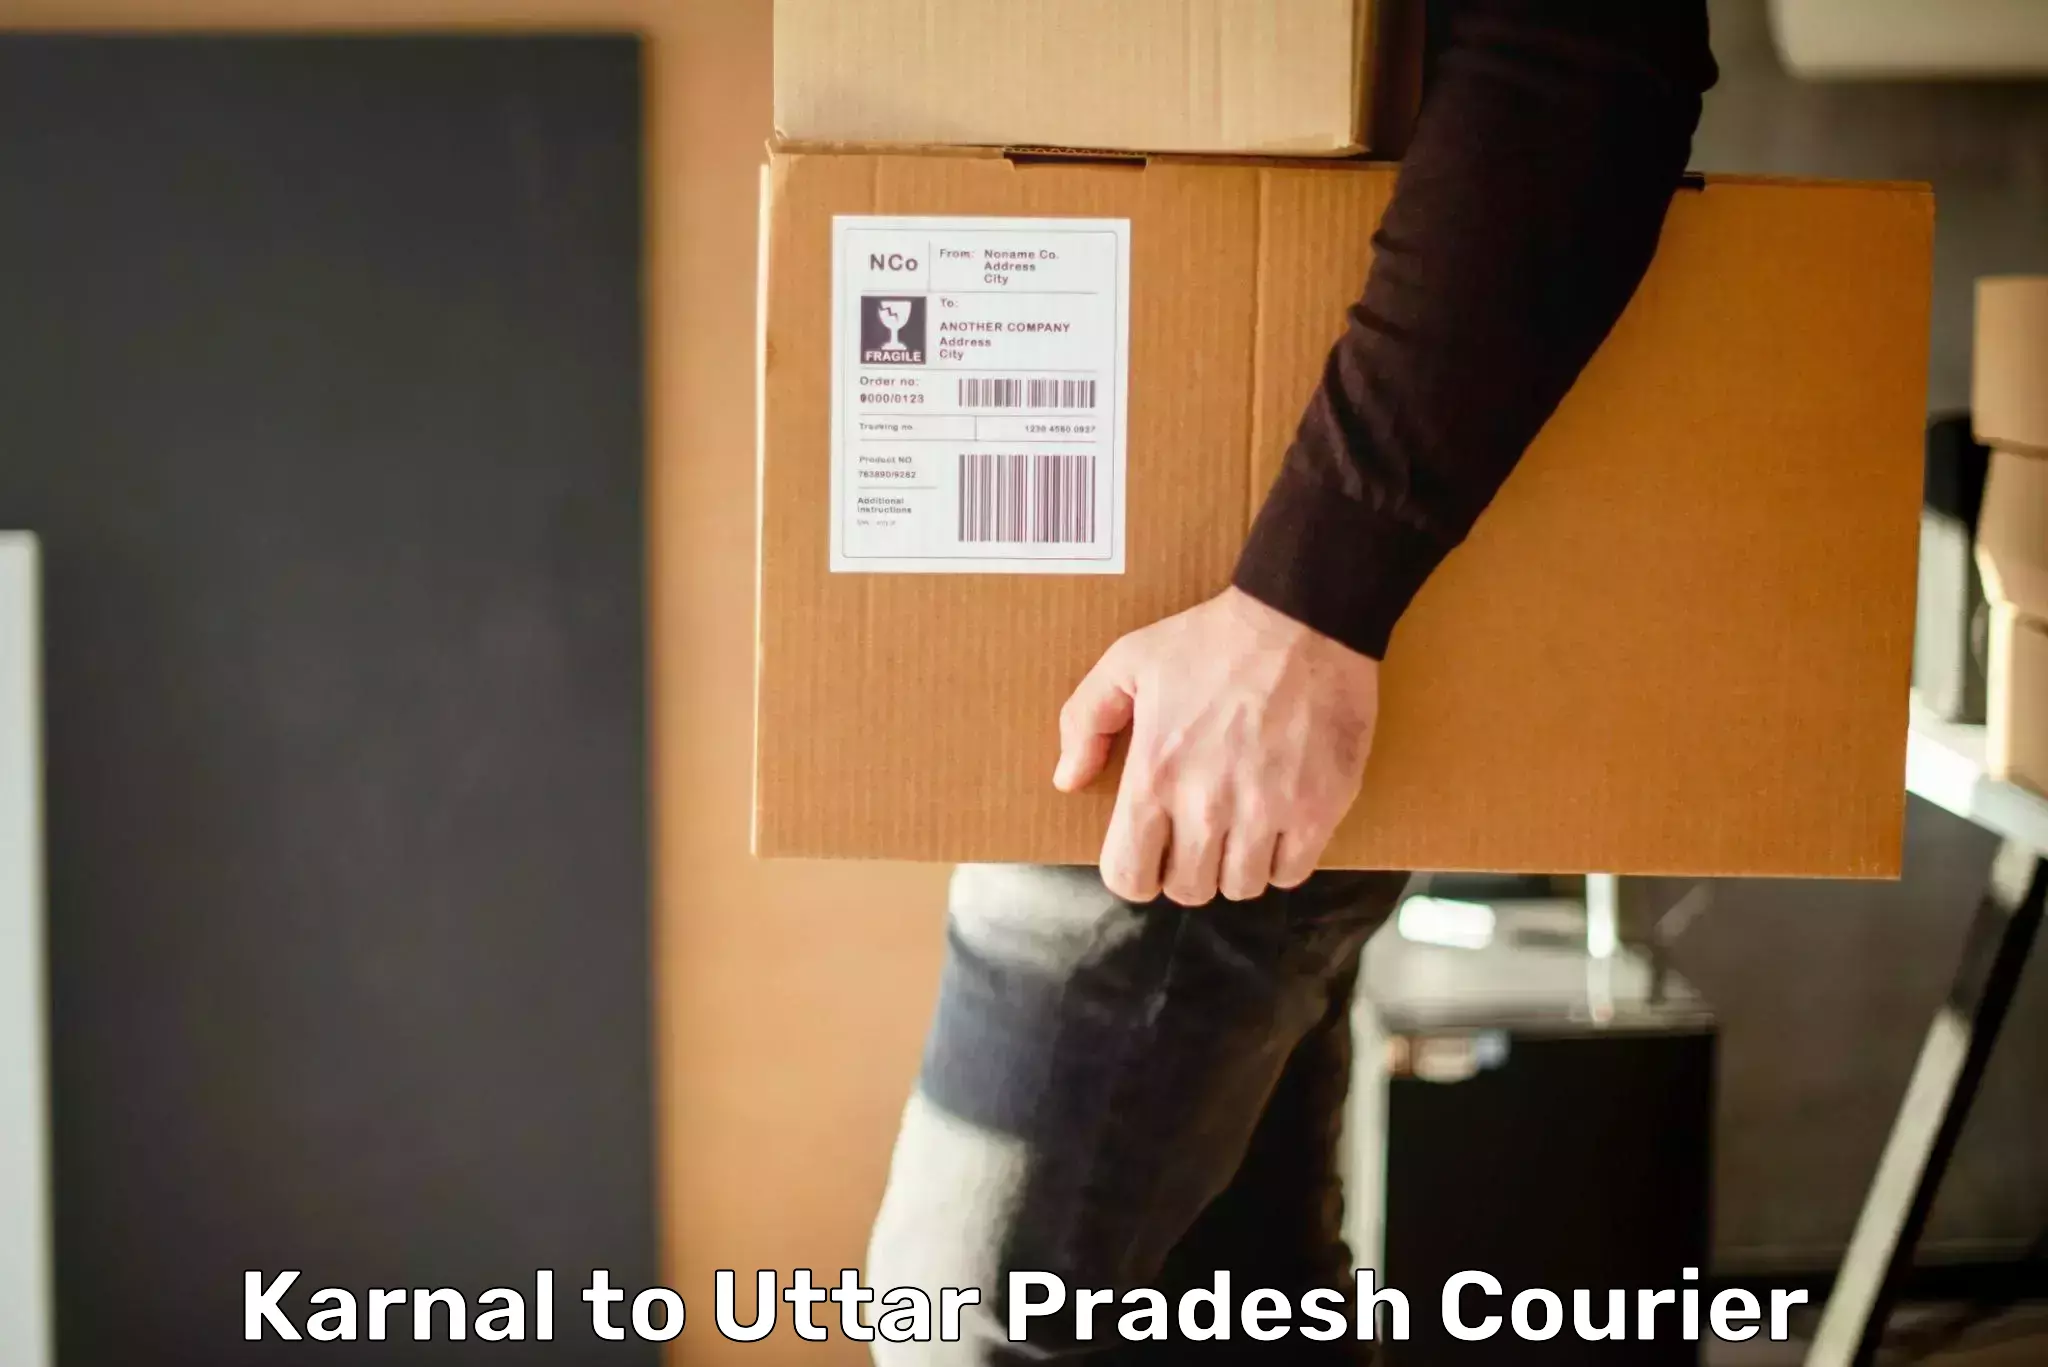 Efficient parcel service Karnal to Uttar Pradesh